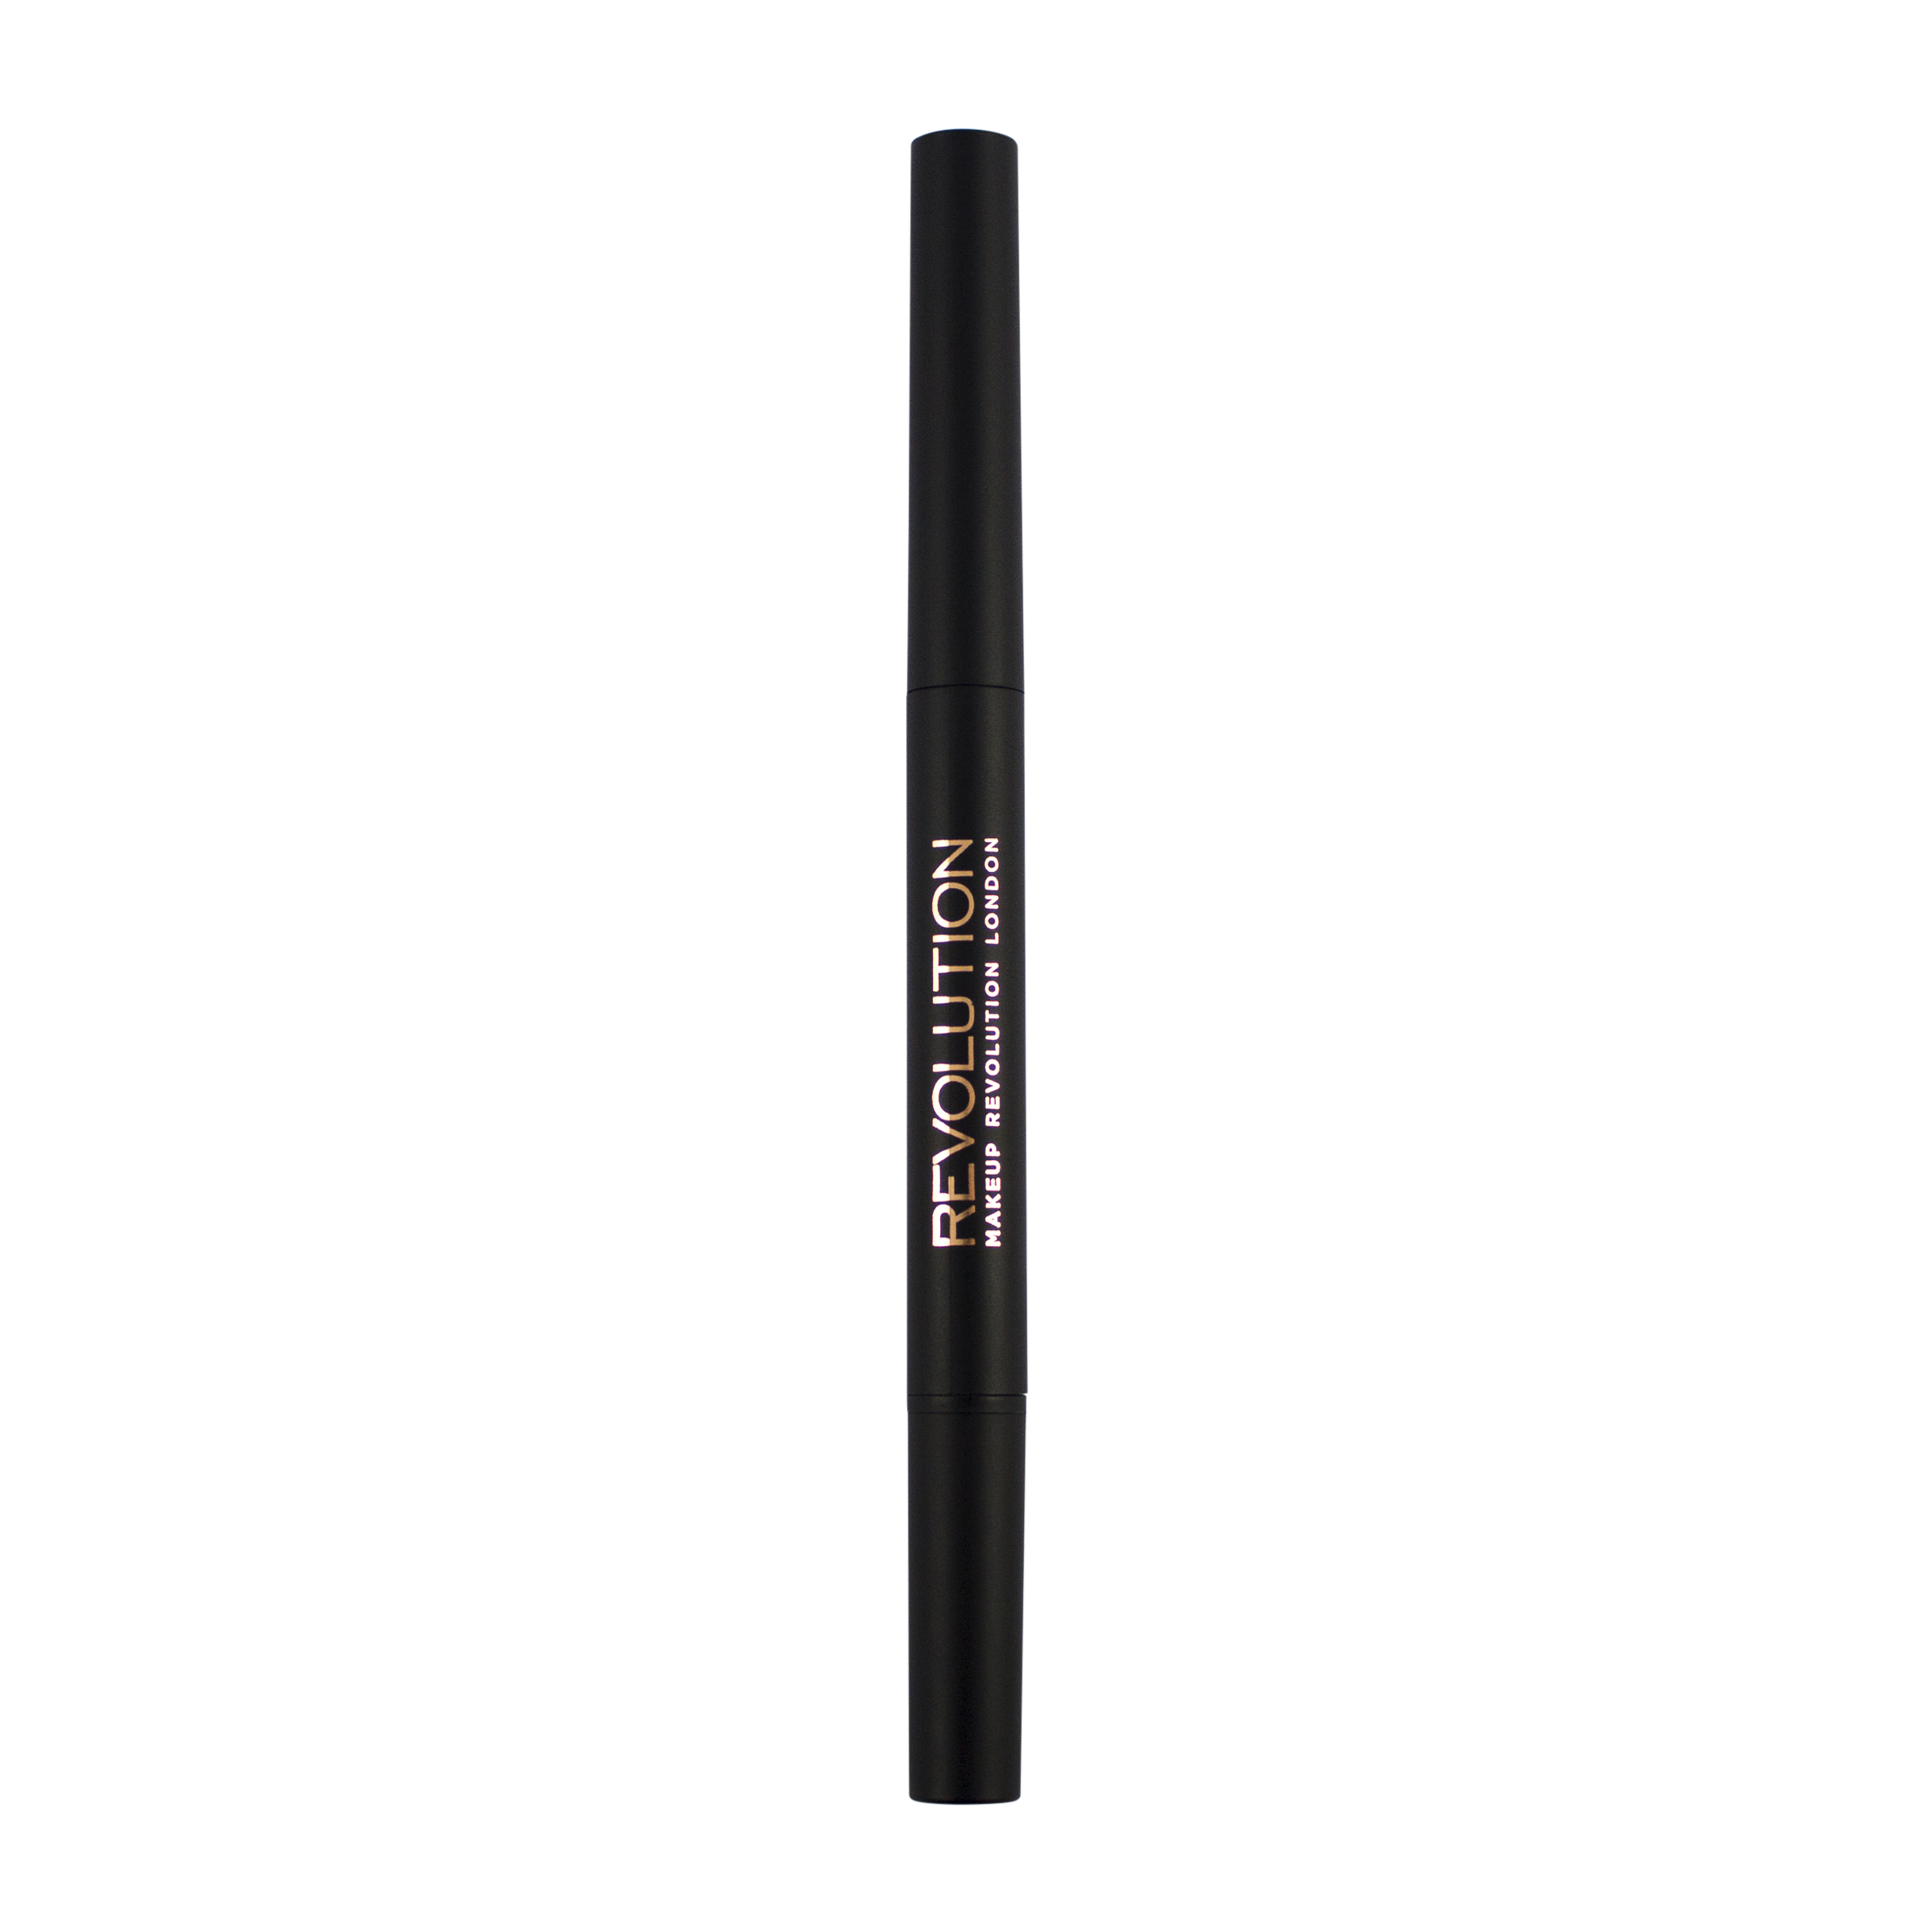 Billede af Makeup Revolution Duo Brow Pencil Medium Brown 15 g.